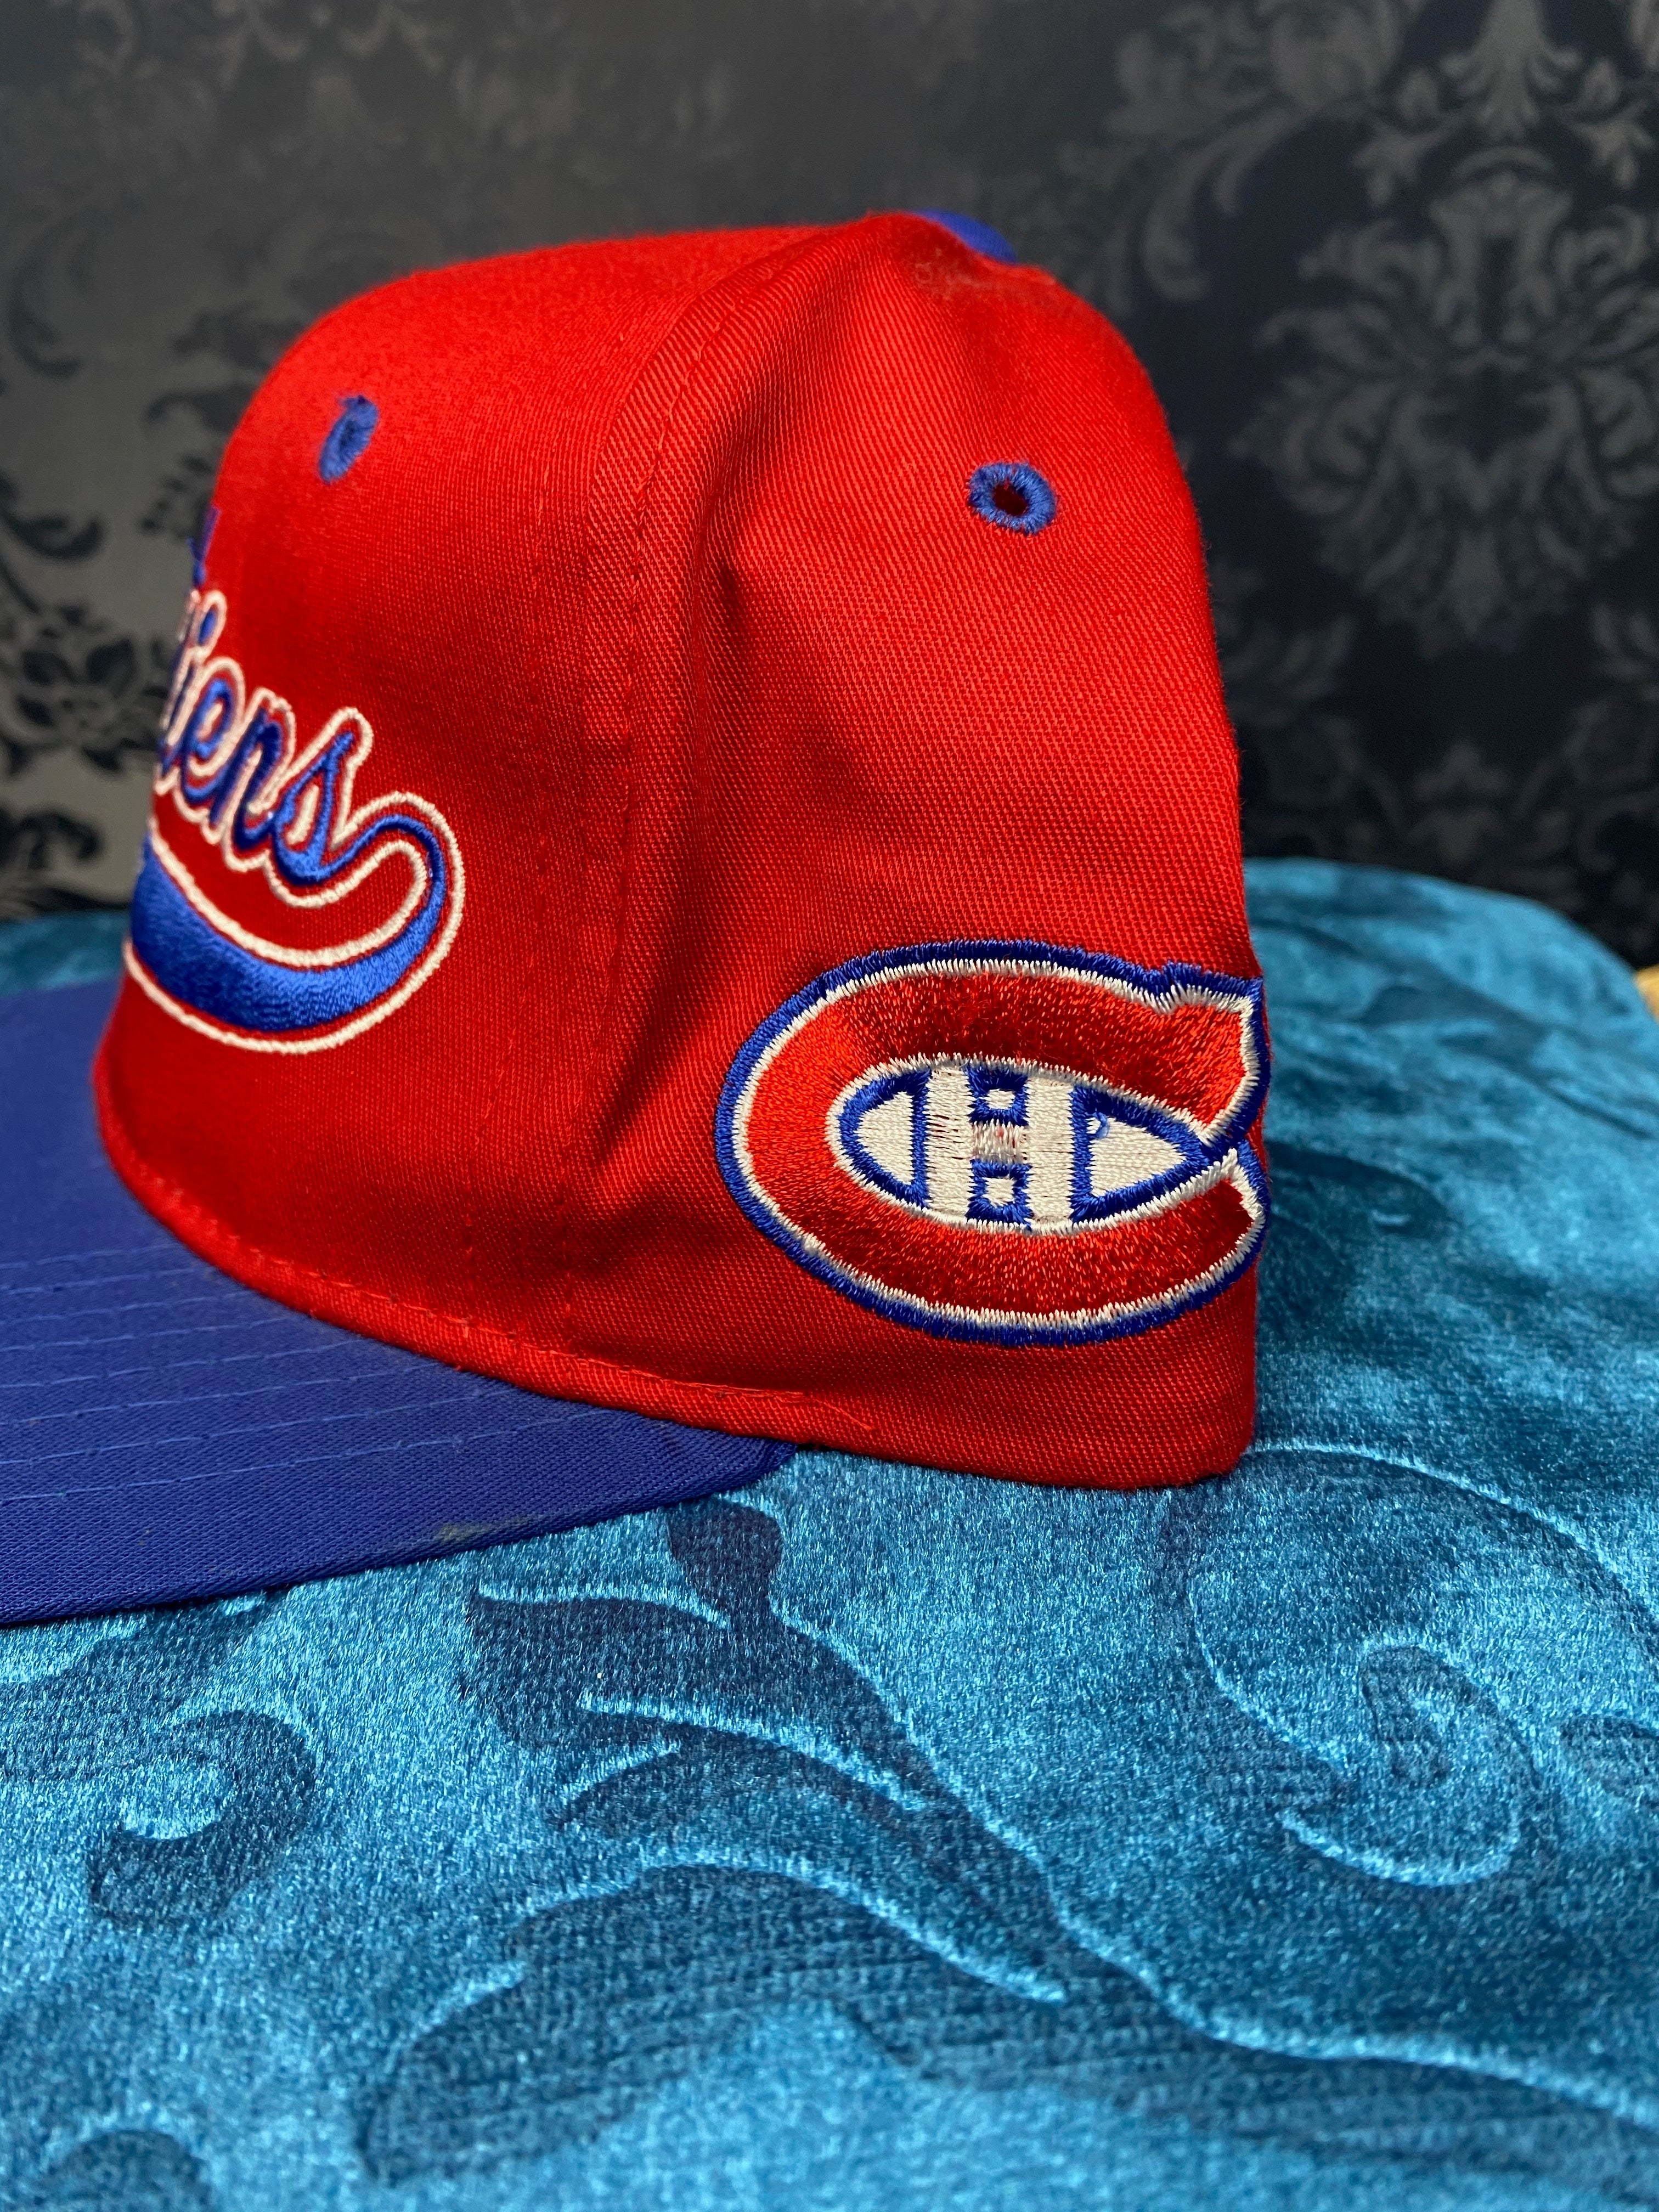 Vintage Montreal "Canadiens" Hockey Starter Snapback